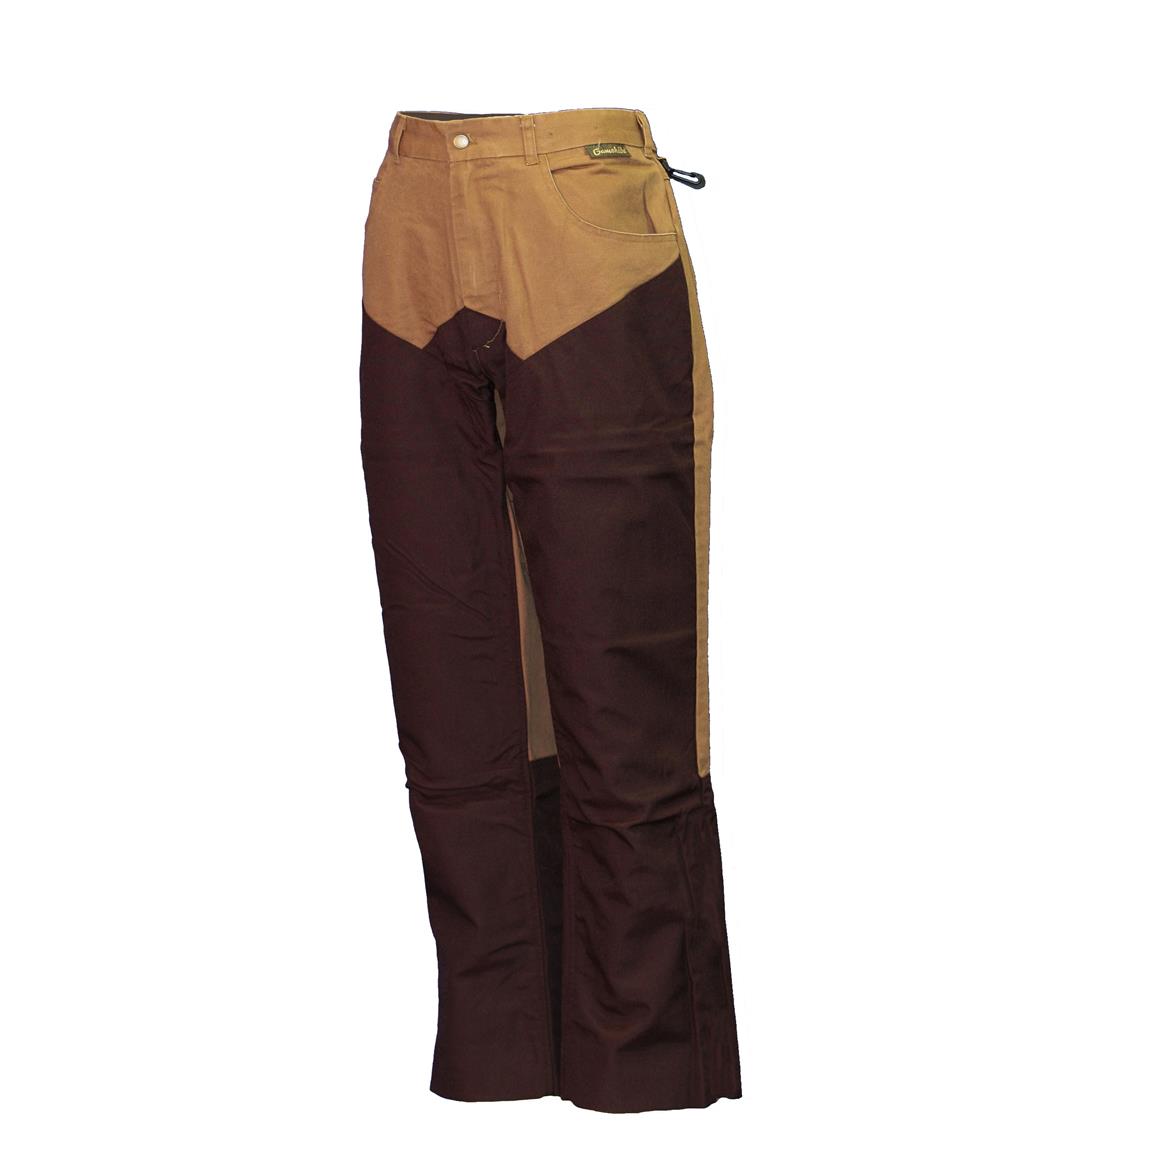 Gamehide Men's Briar-Proof Upland Pants, Marsh Brown